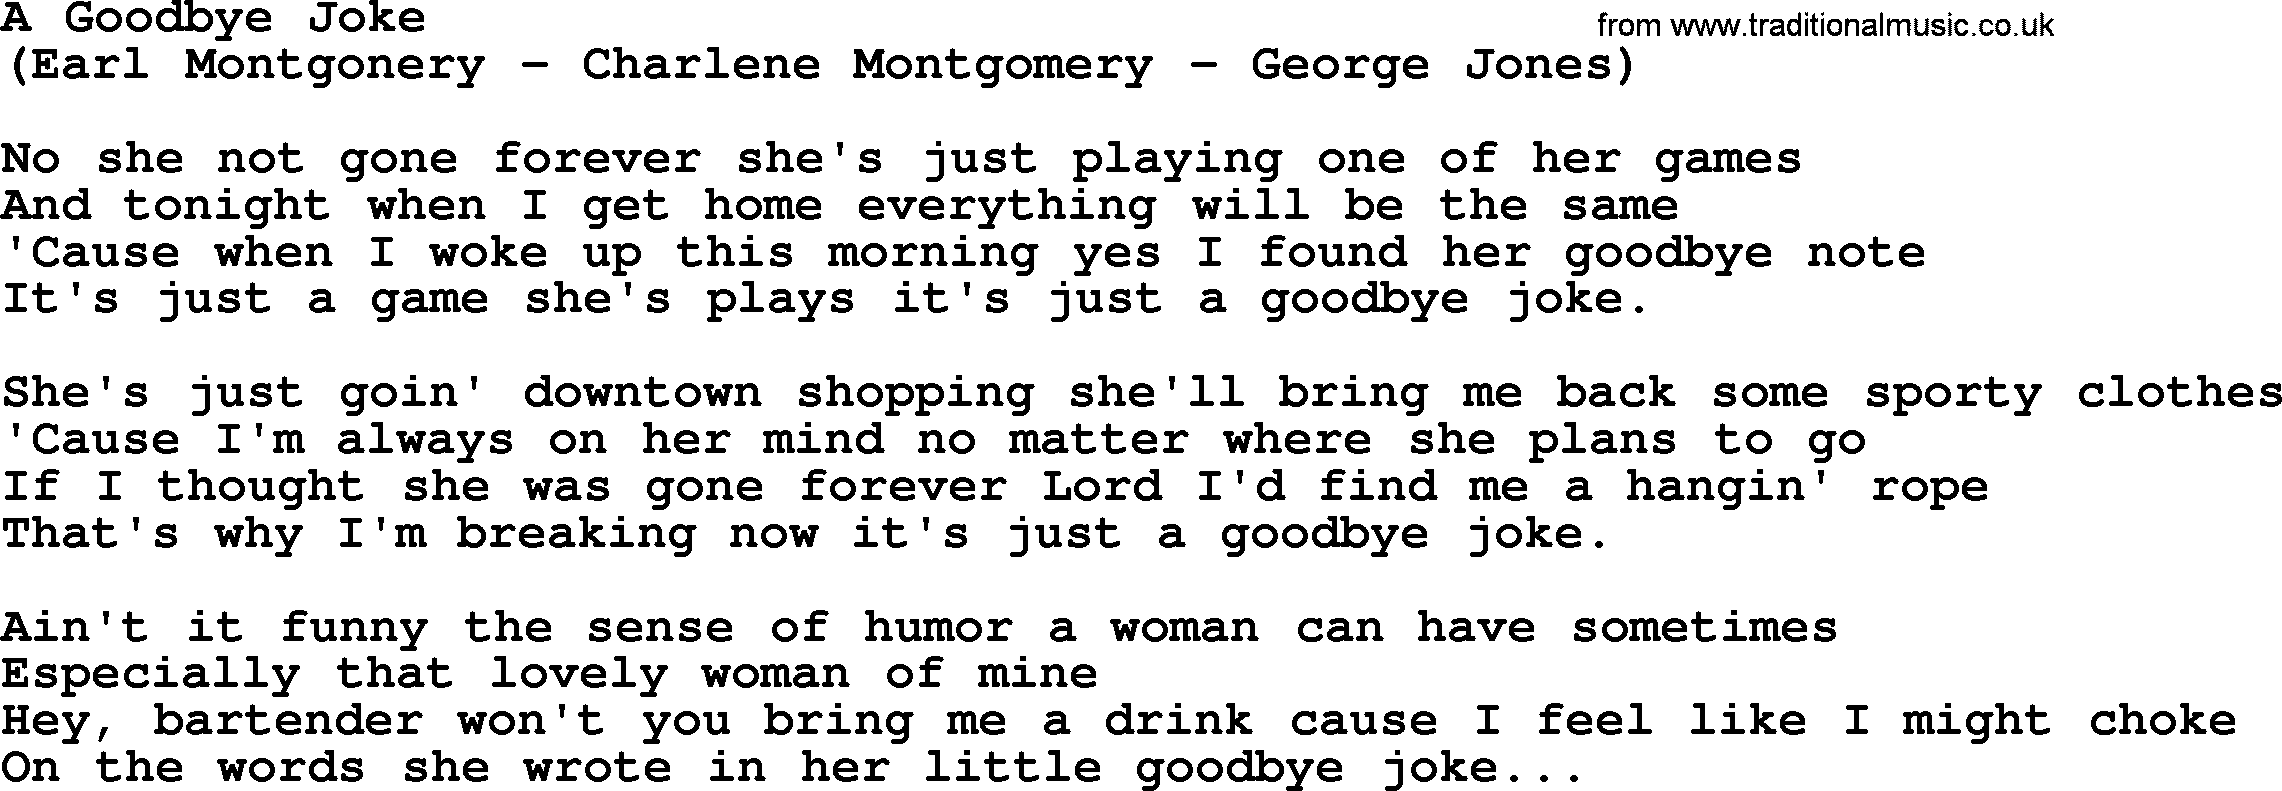 George Jones song: A Goodbye Joke, lyrics